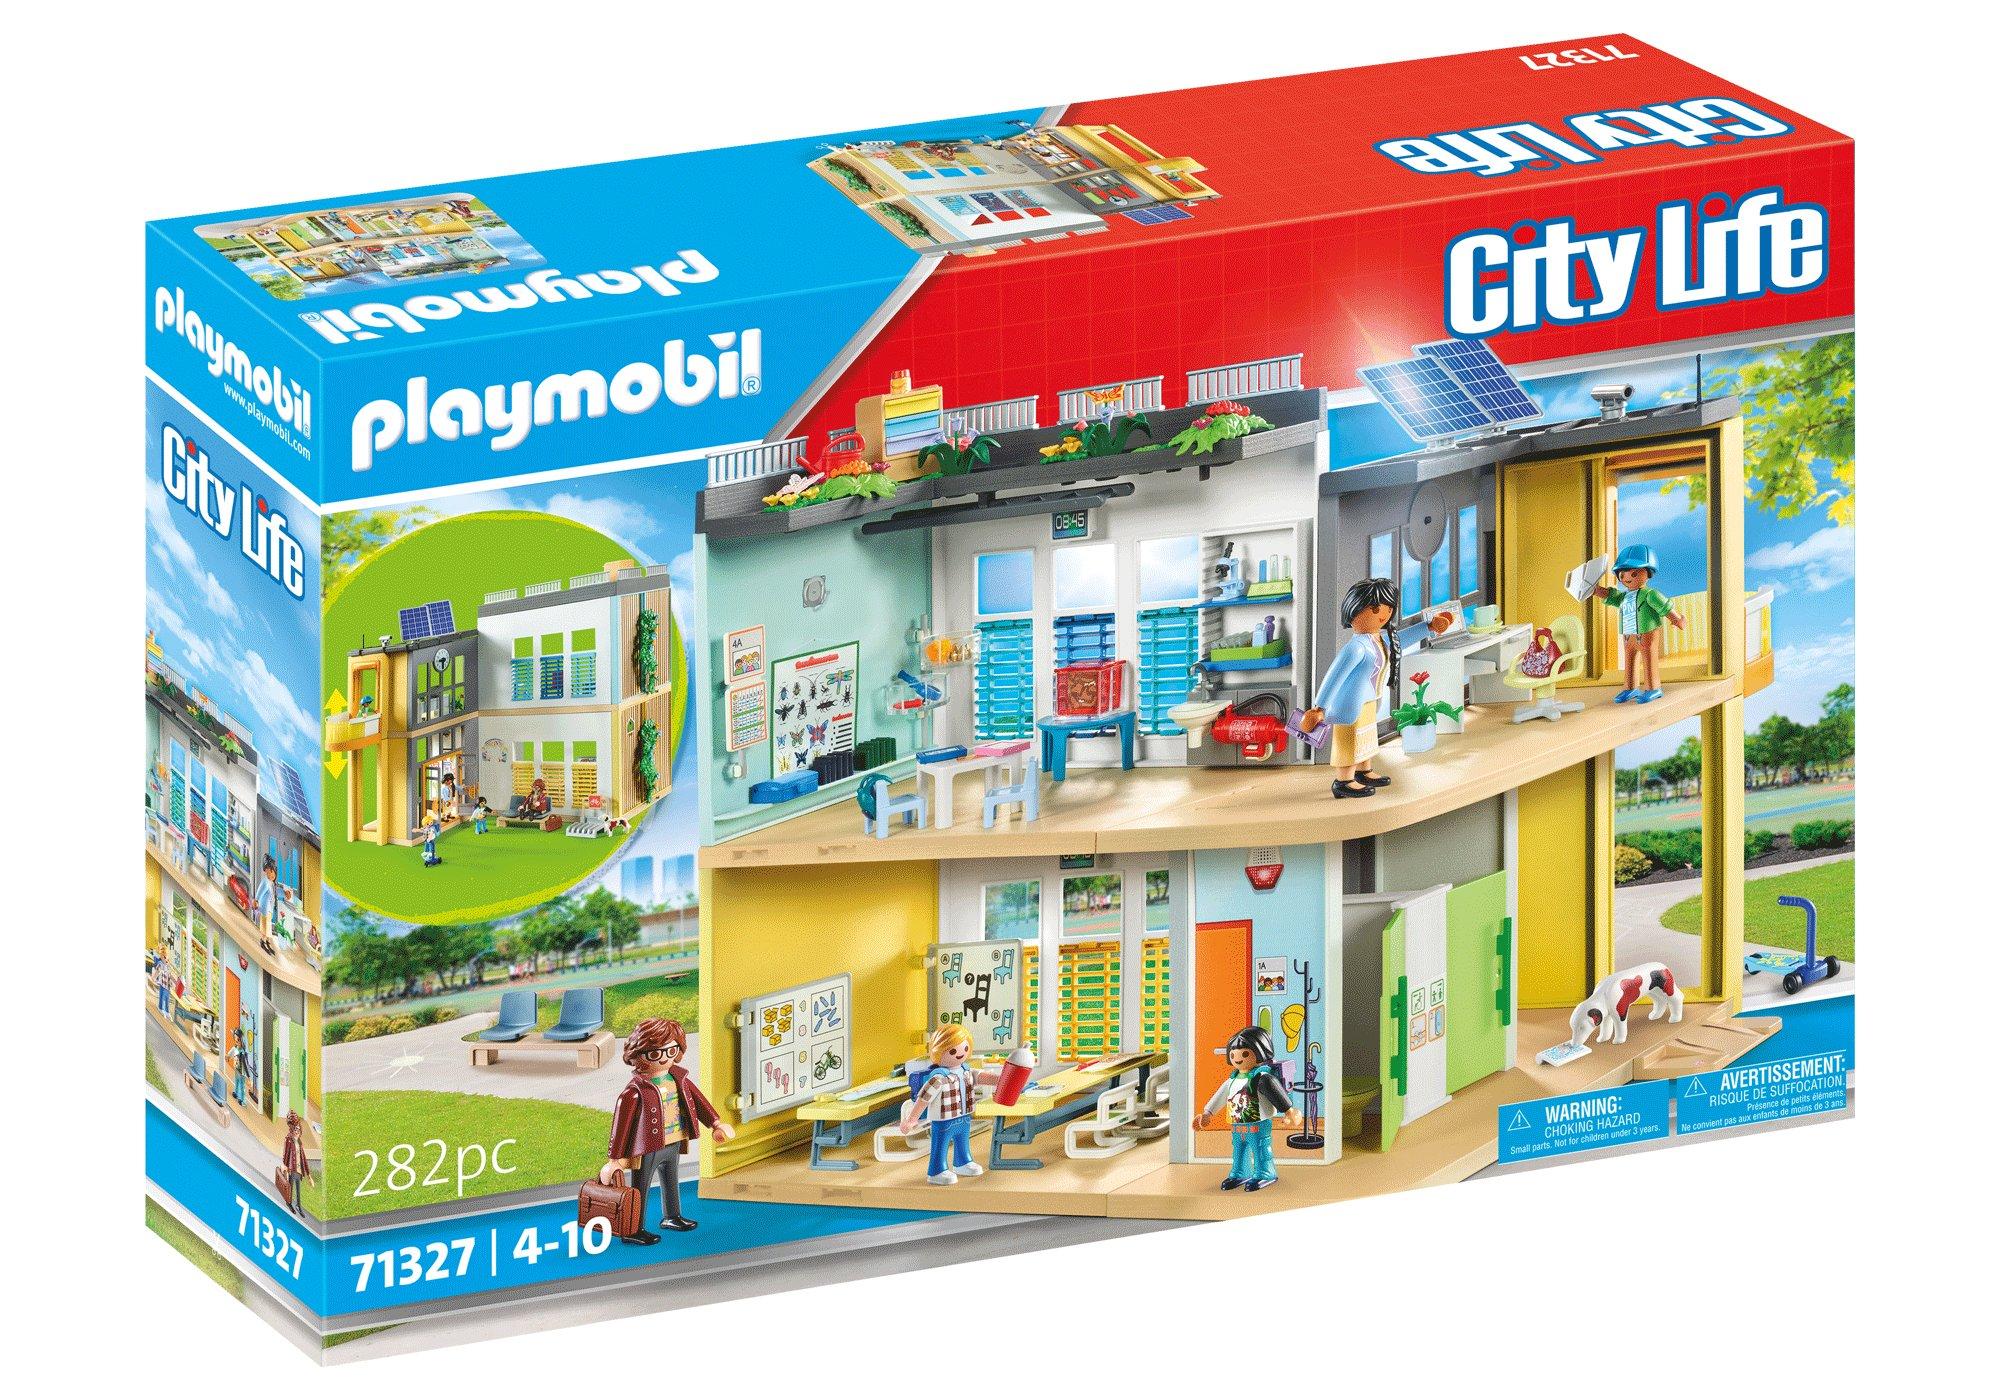 Playmobil City Life School Bus Review 